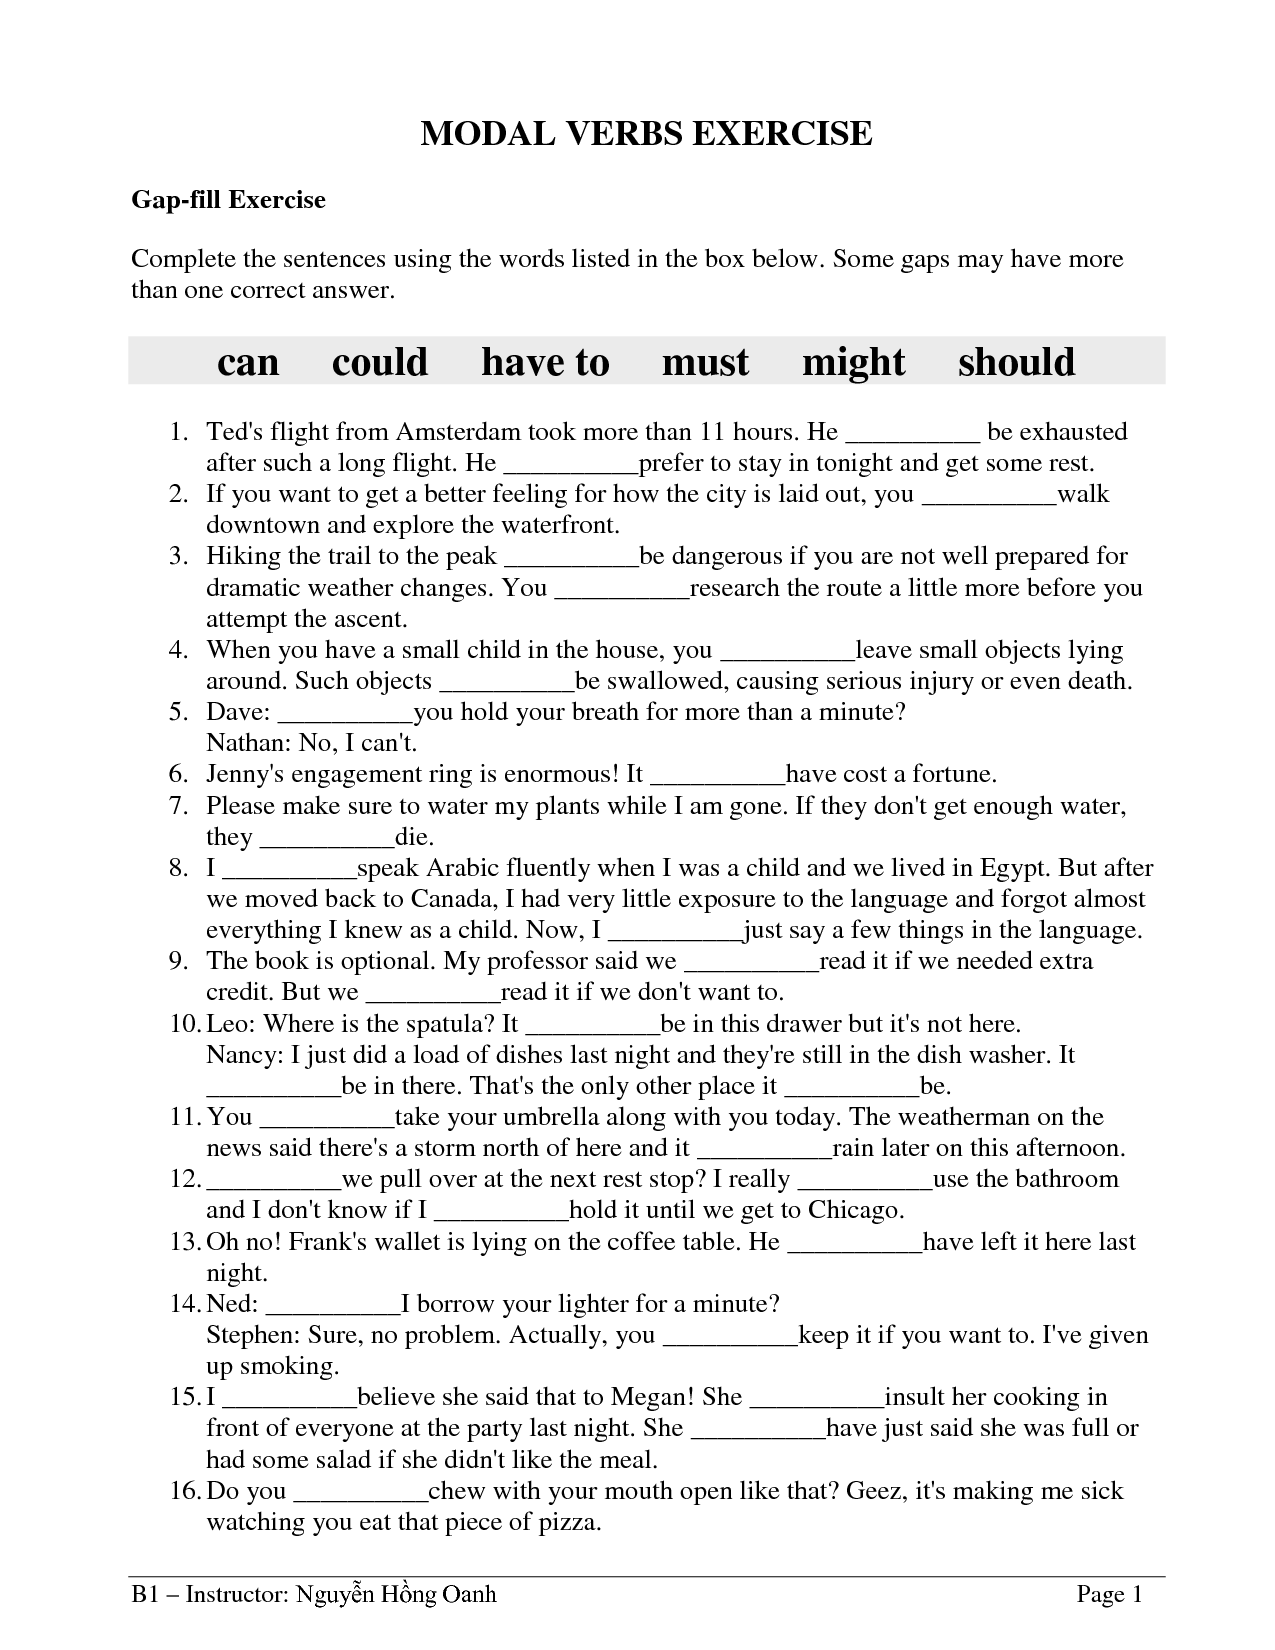 Modal Verbs Modal Verbs English Grammar Worksheets Modals Verbs